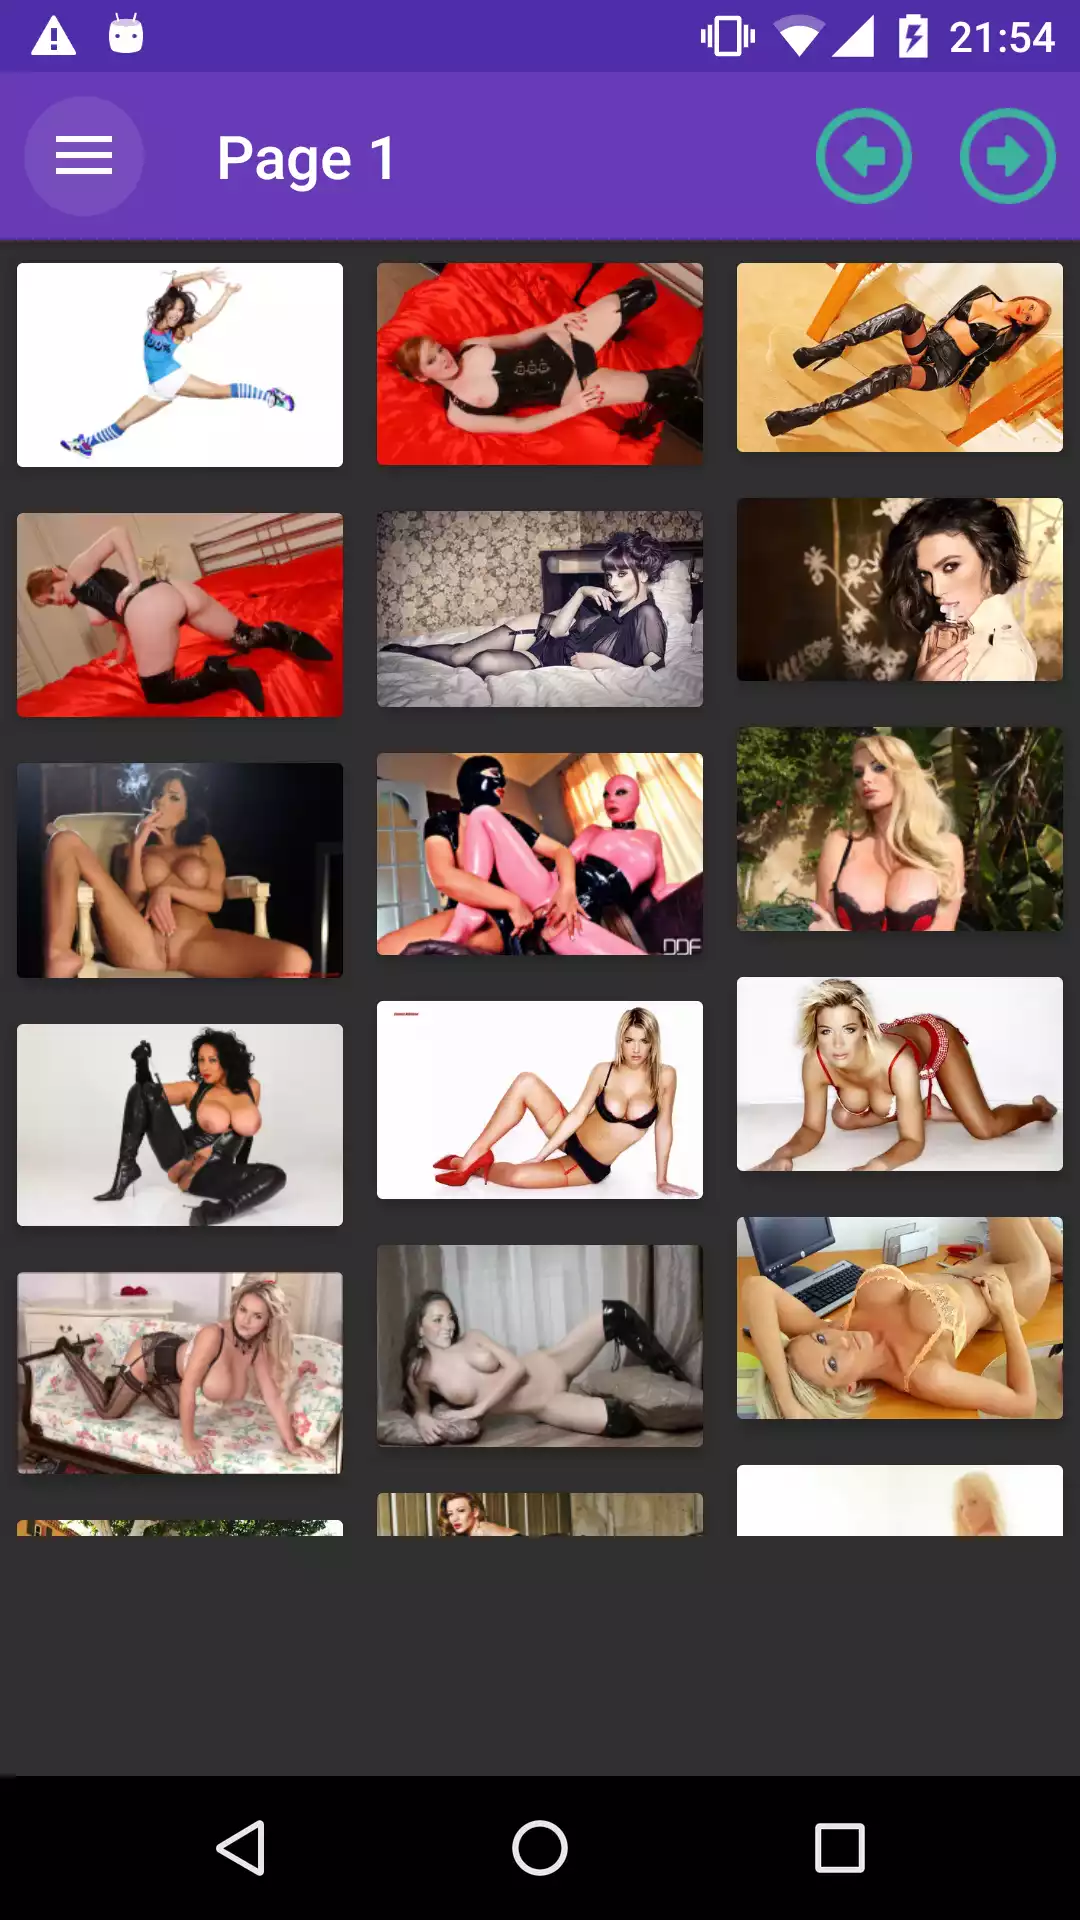 British Backgrounds wallpapers,sexy,hot,apks,download,pics,doujinshi,puzzles,and,app,photo,pornstar,mod,good,apps,hentai,hetai,hentail,panties,market,photos,downloading,android,porn,apk